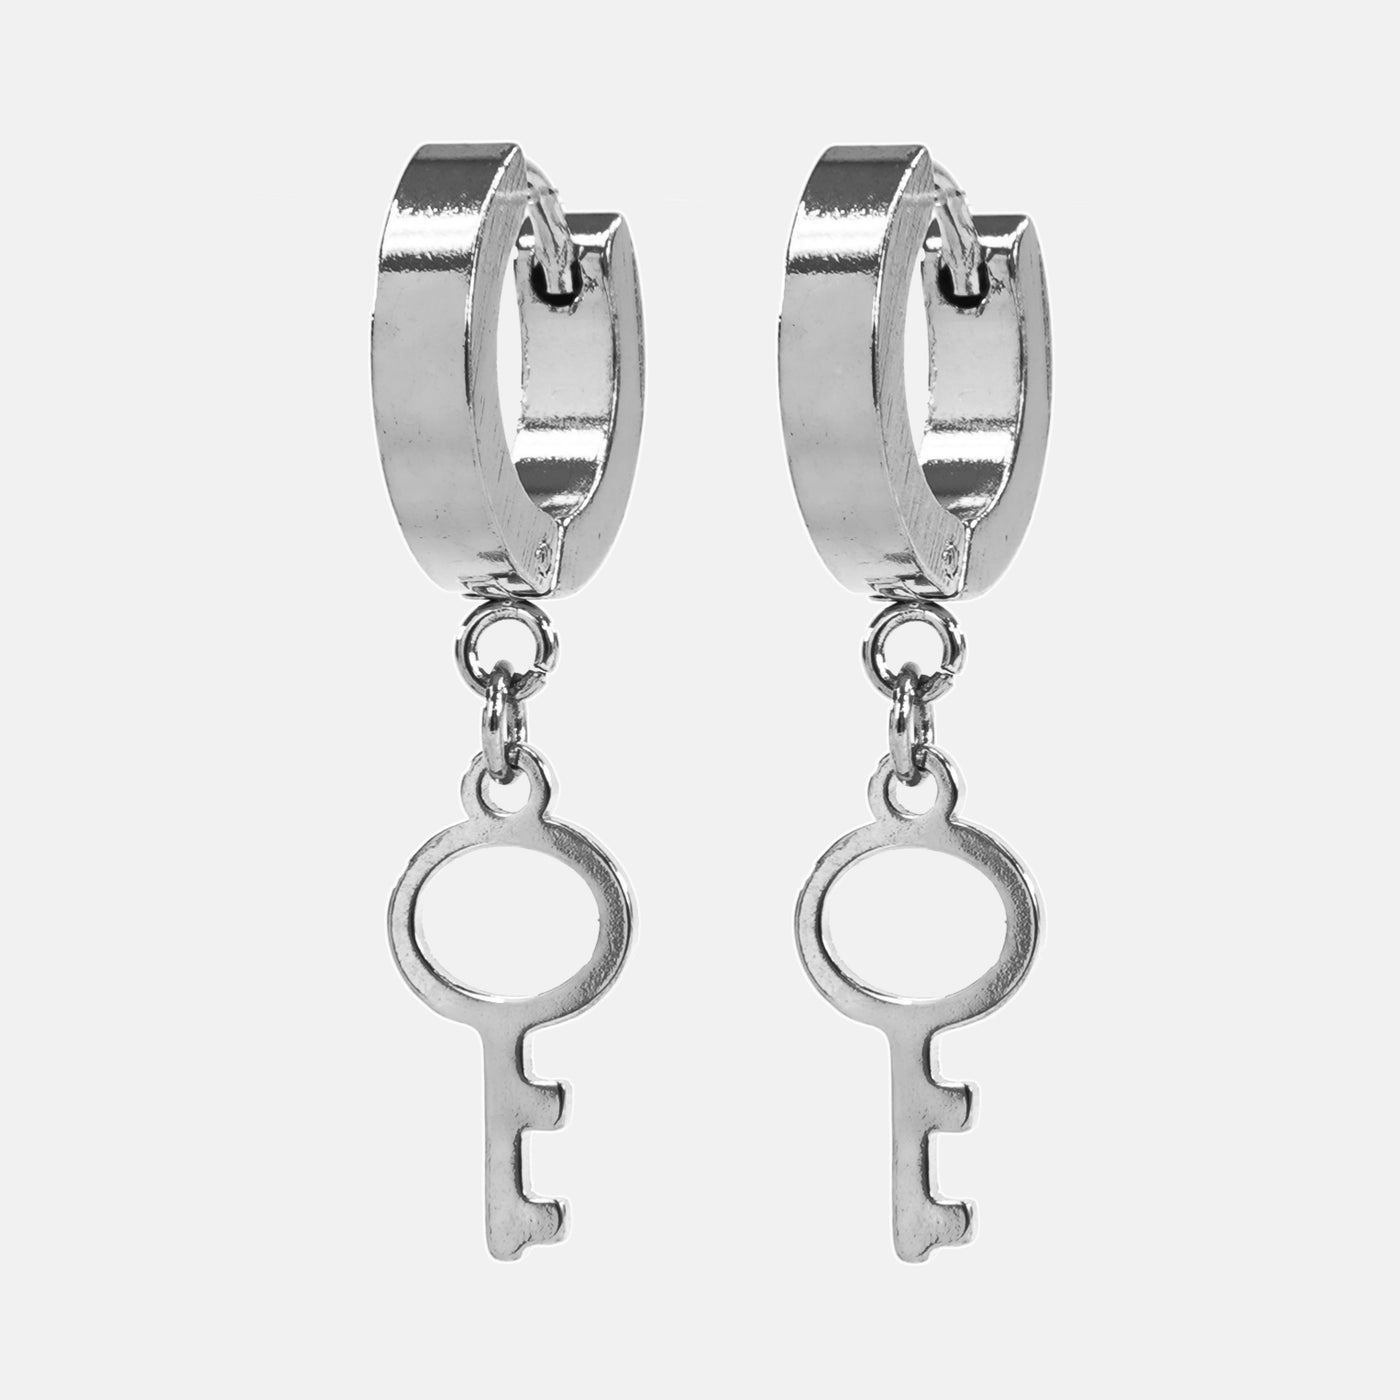 Keys Earrings - Stainless Steel